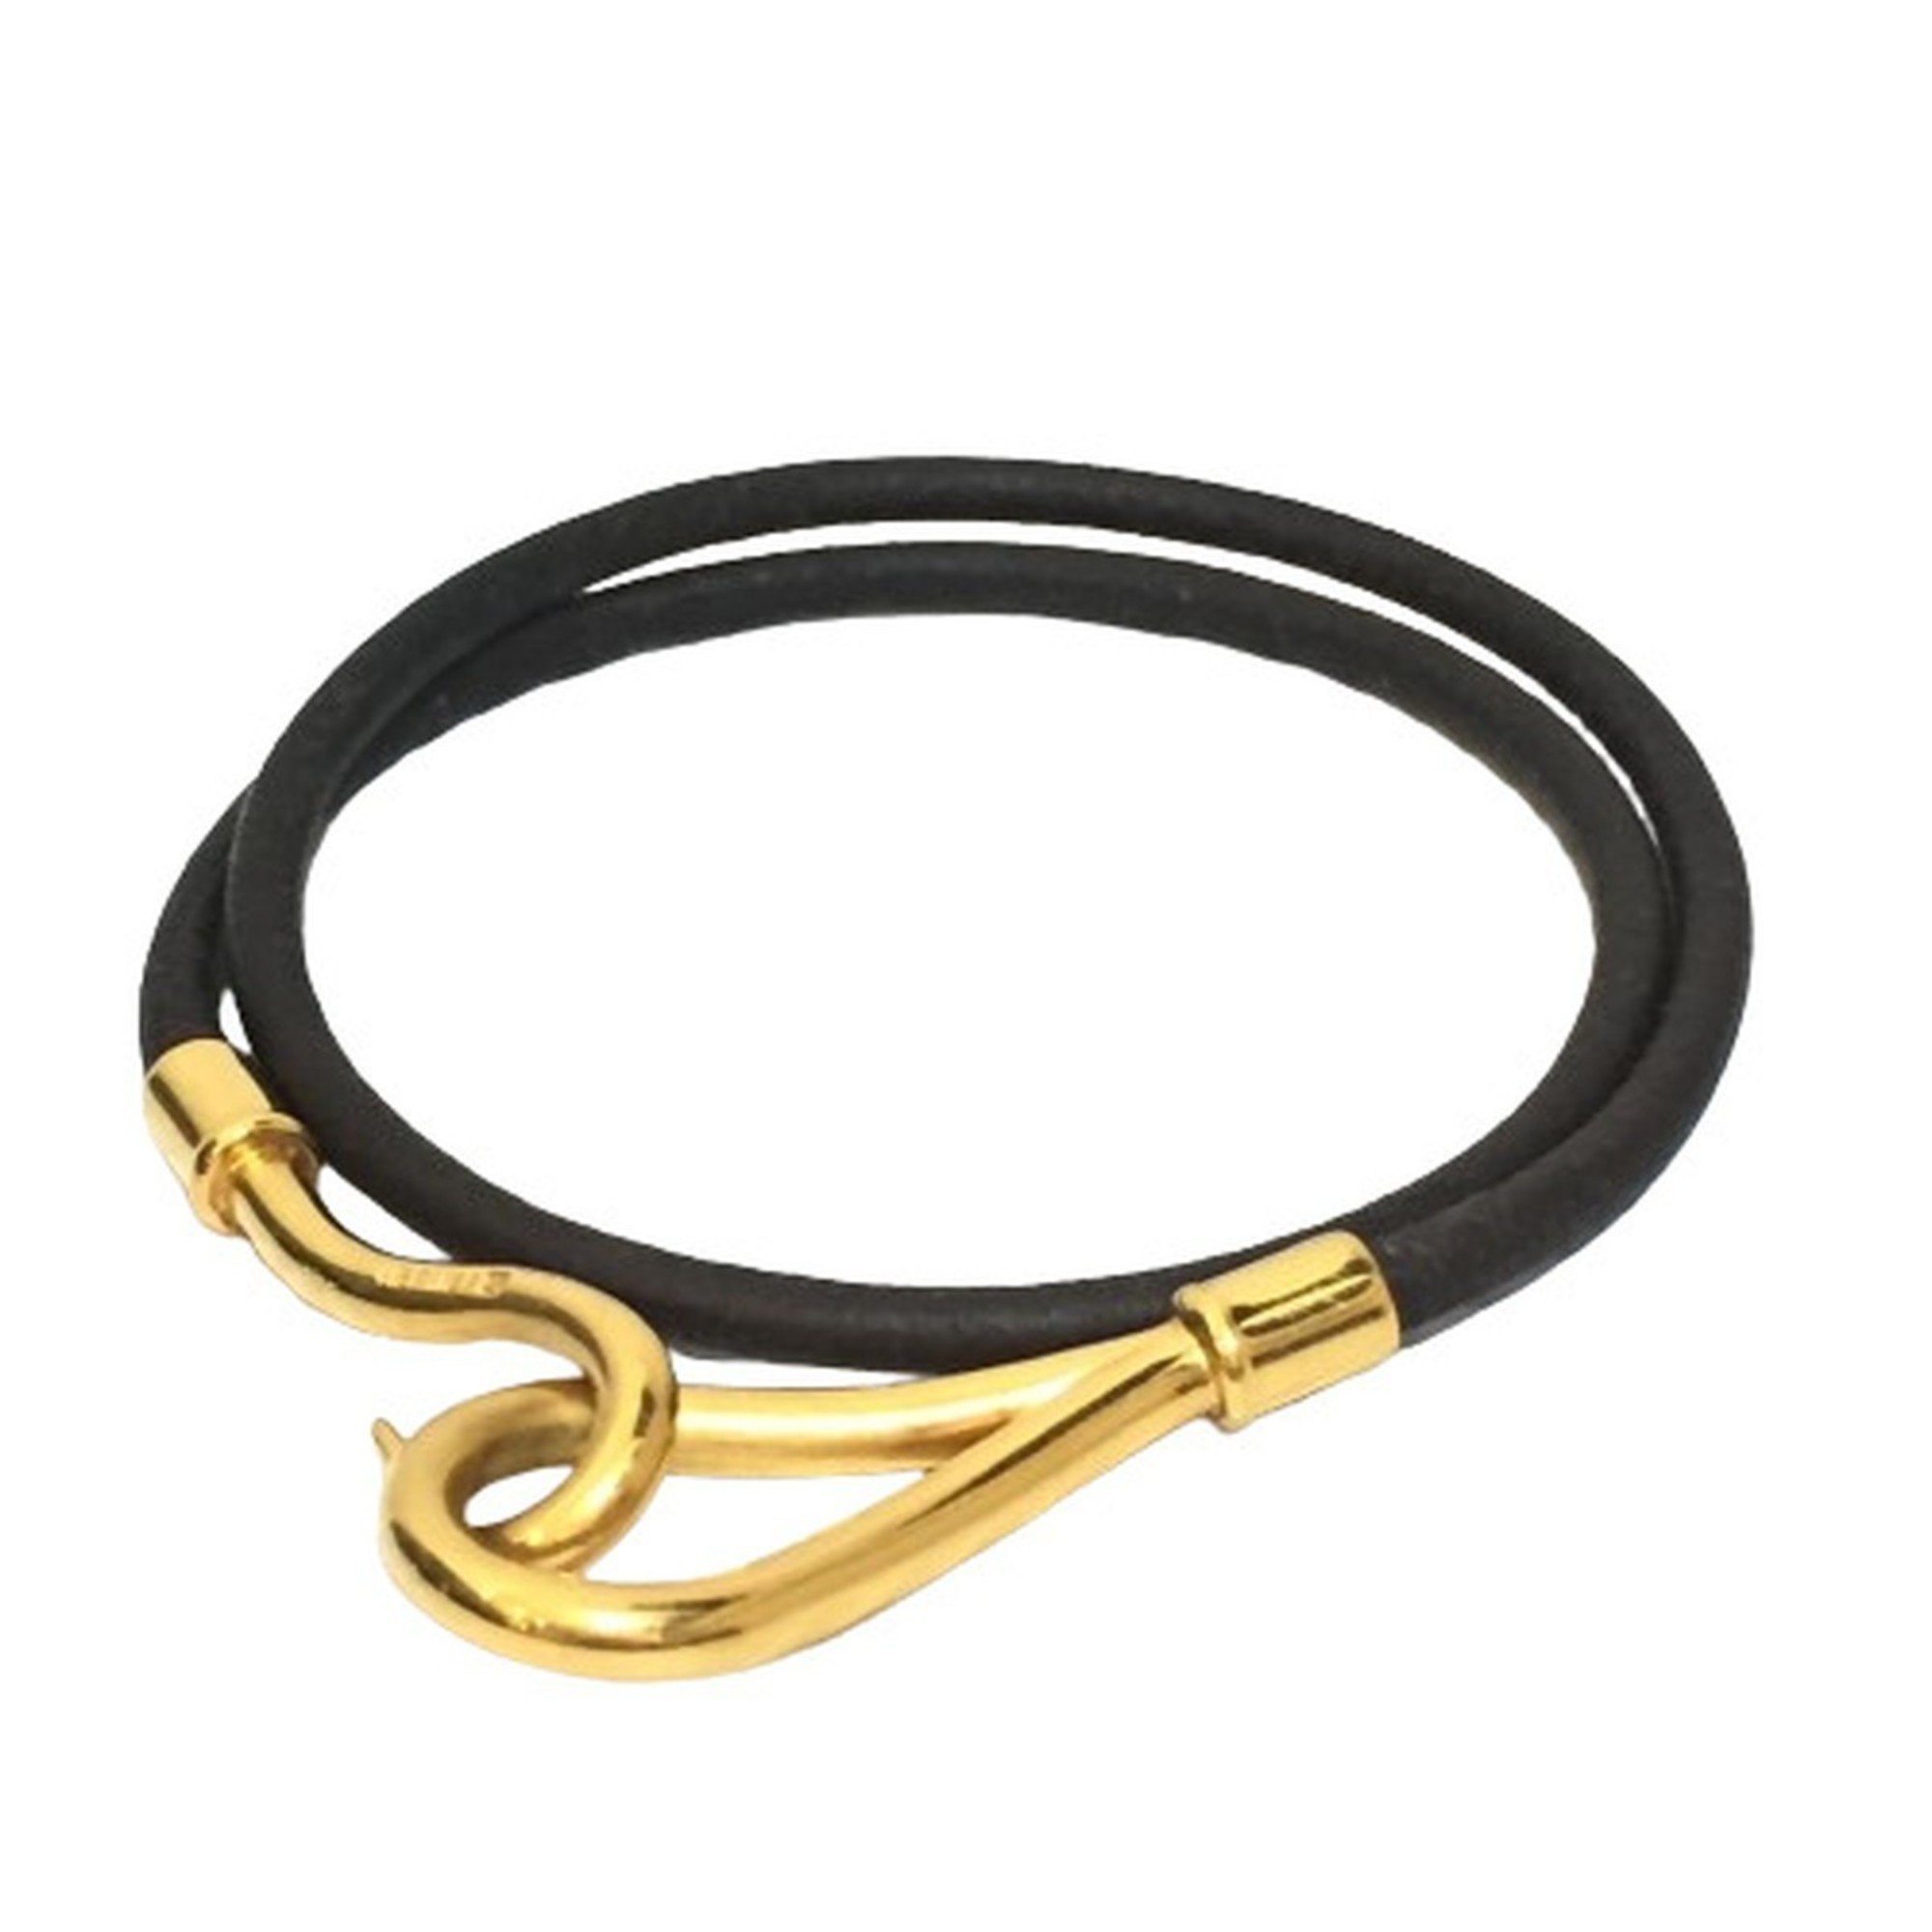 HERMES Jumbo 2-row leather bracelet choker for men and women, accessory, gold black, Kaizuka store IT8SVSUJ74CA RM1276D